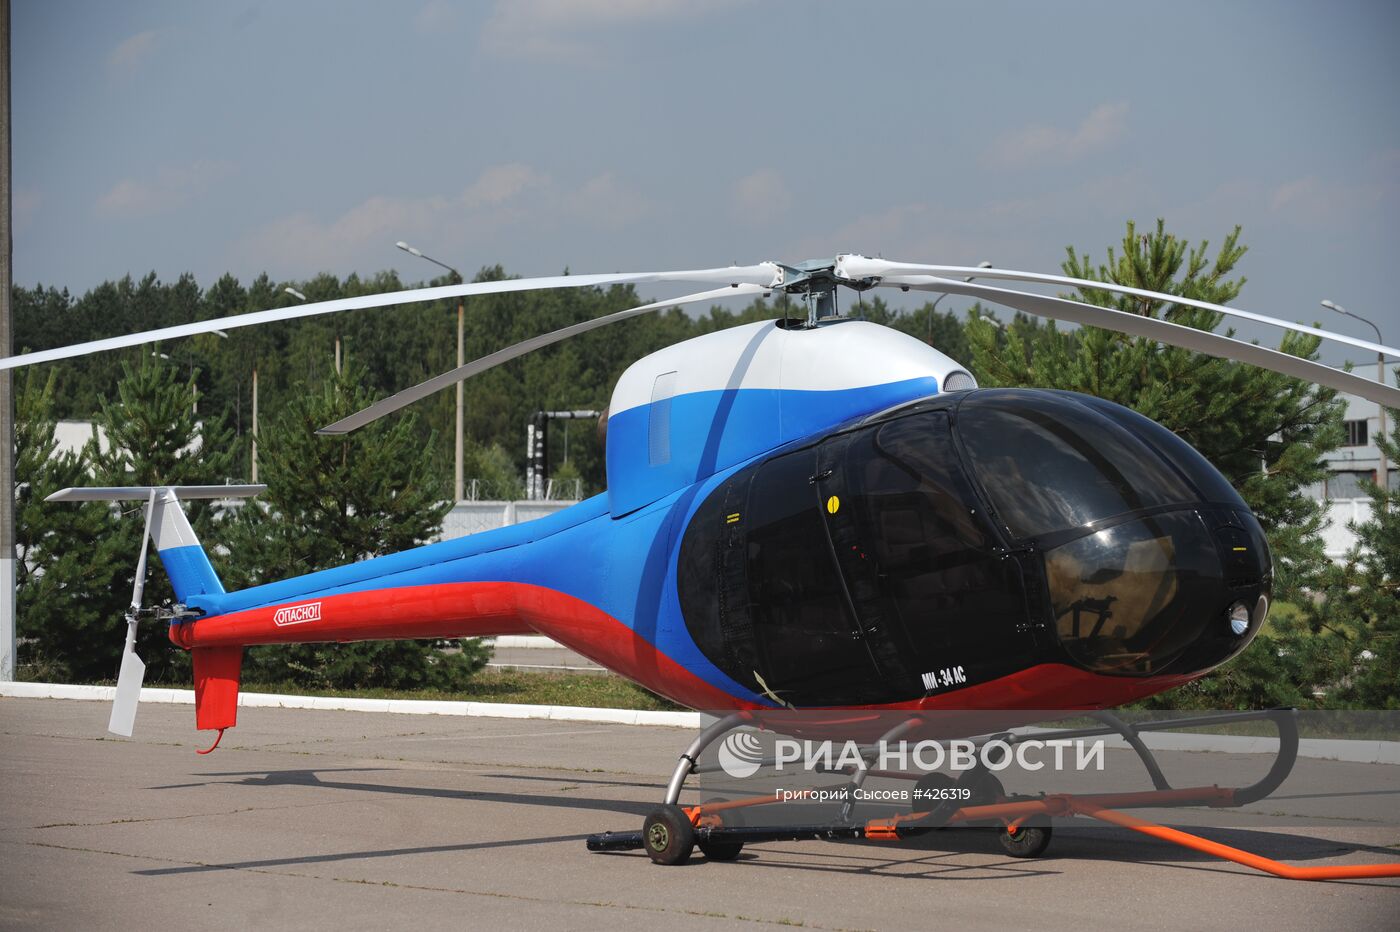 Презентация нового вертолета Ми-34 "Сапсан"